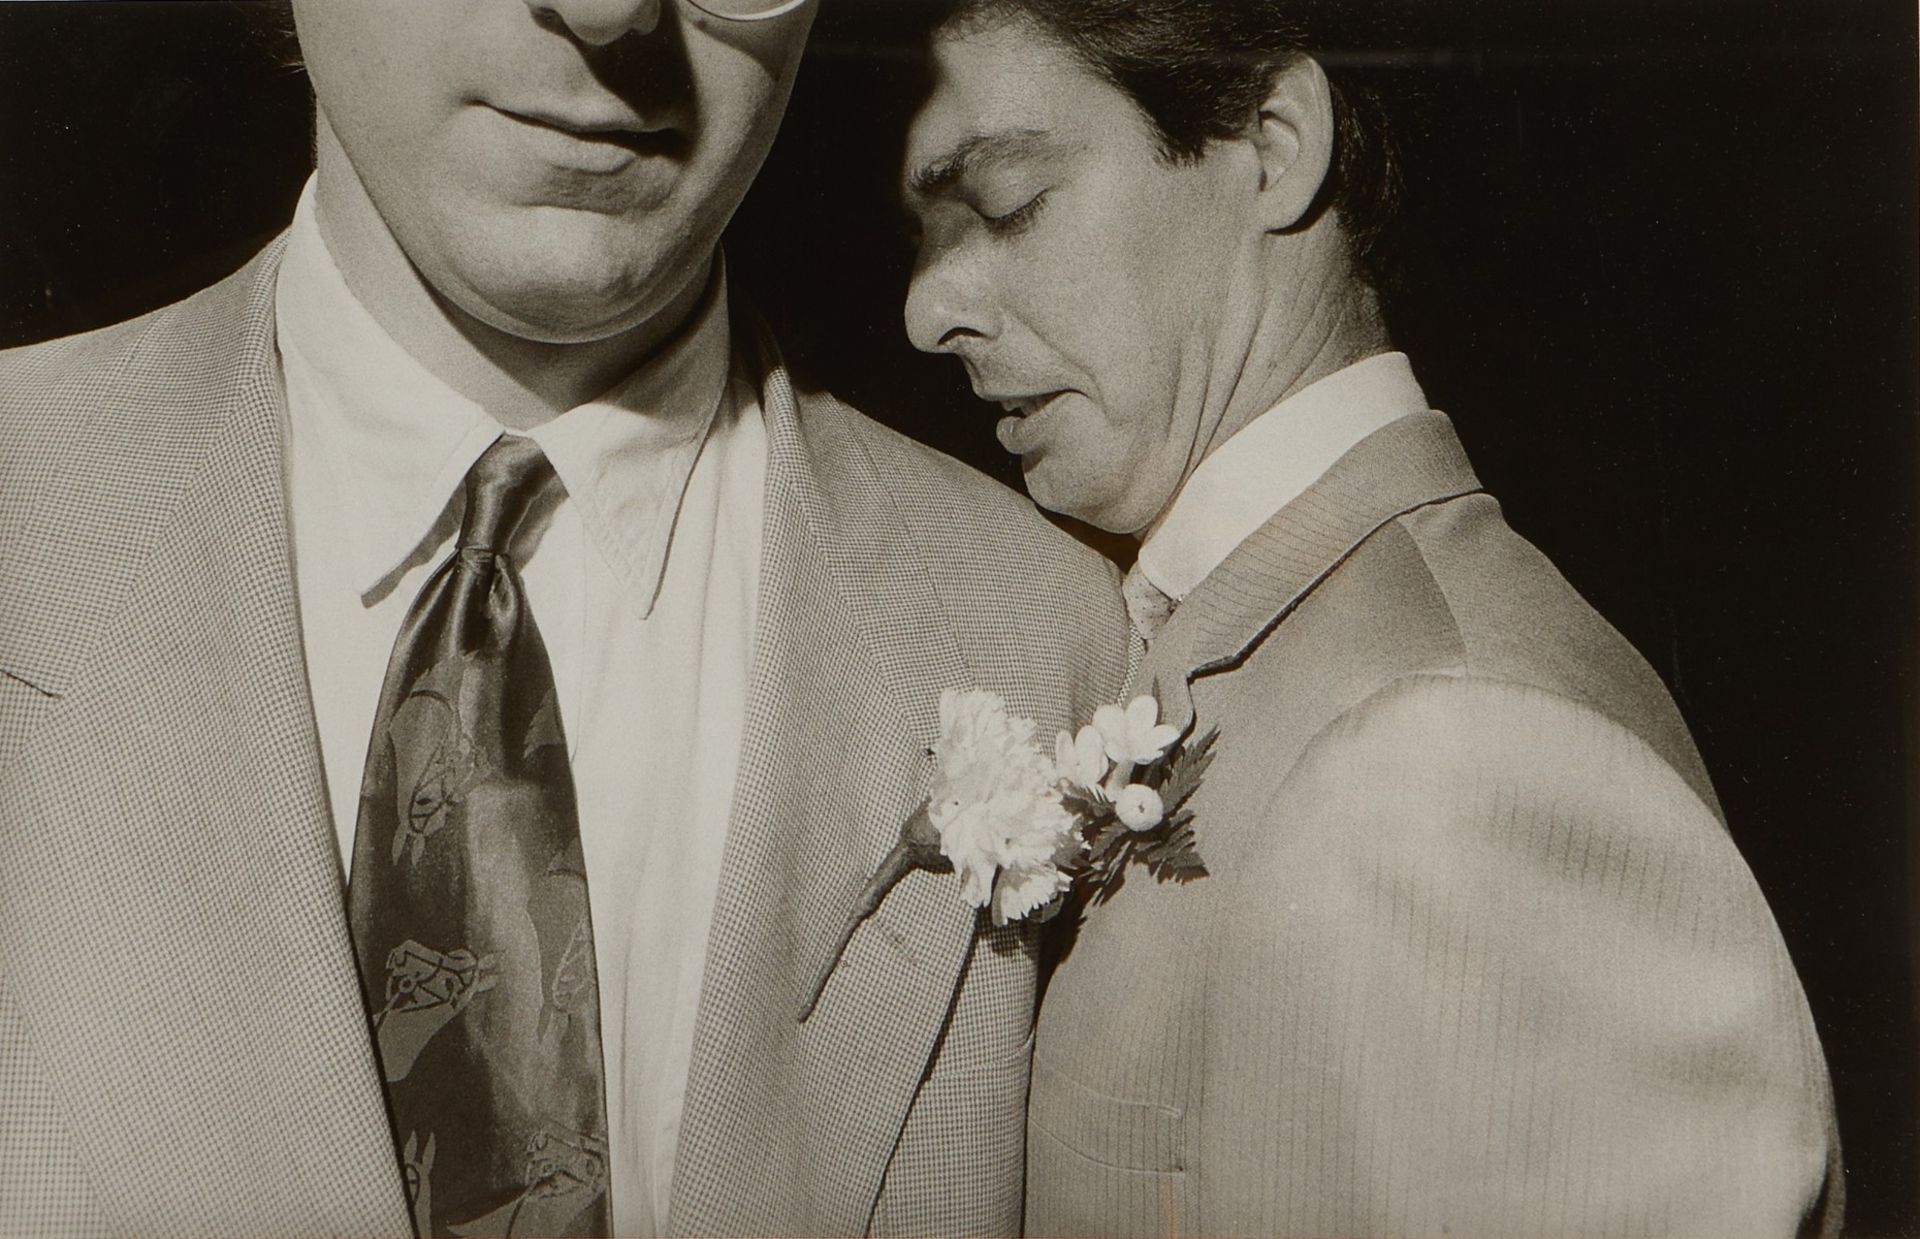 Larry Fink "Carlos & Tom" Photograph 1981